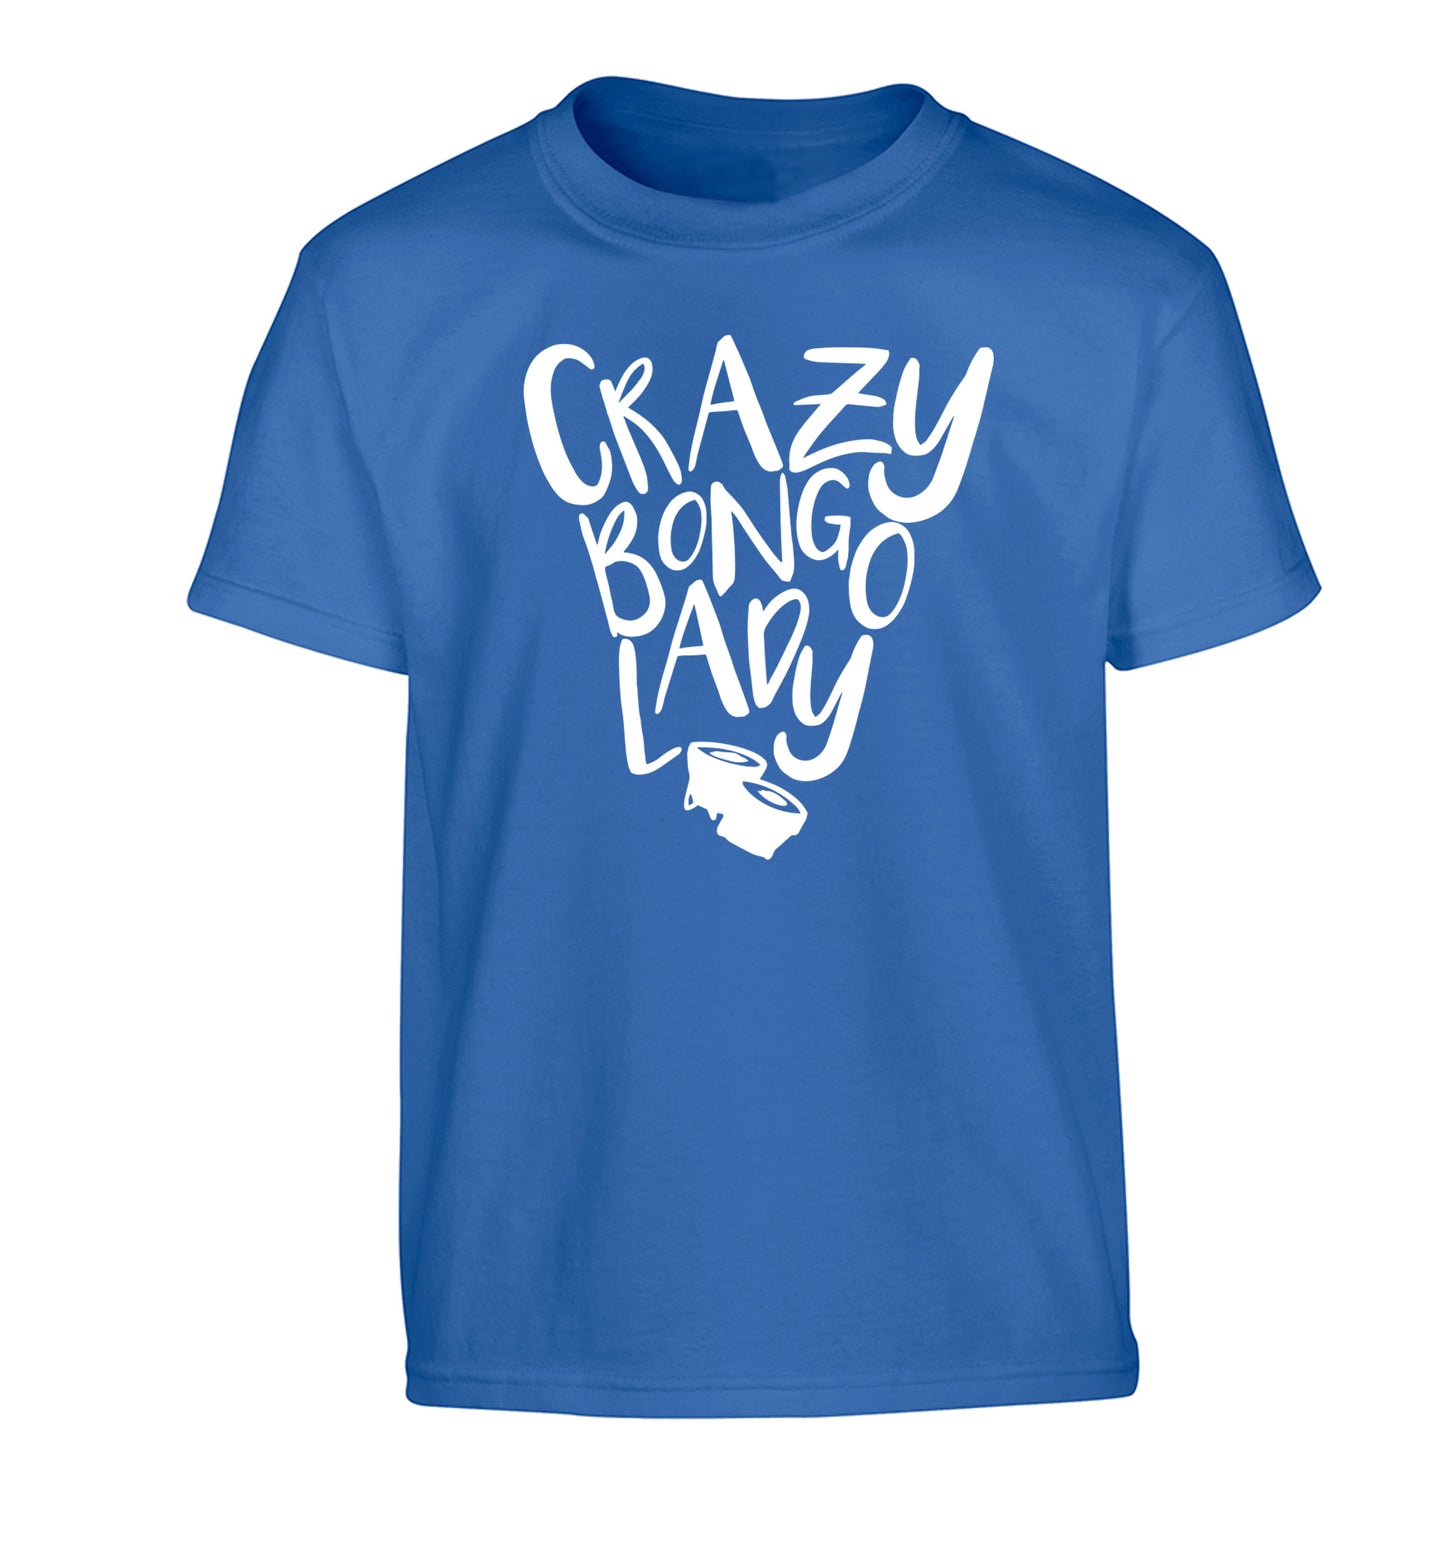 Crazy bongo lady Children's blue Tshirt 12-14 Years